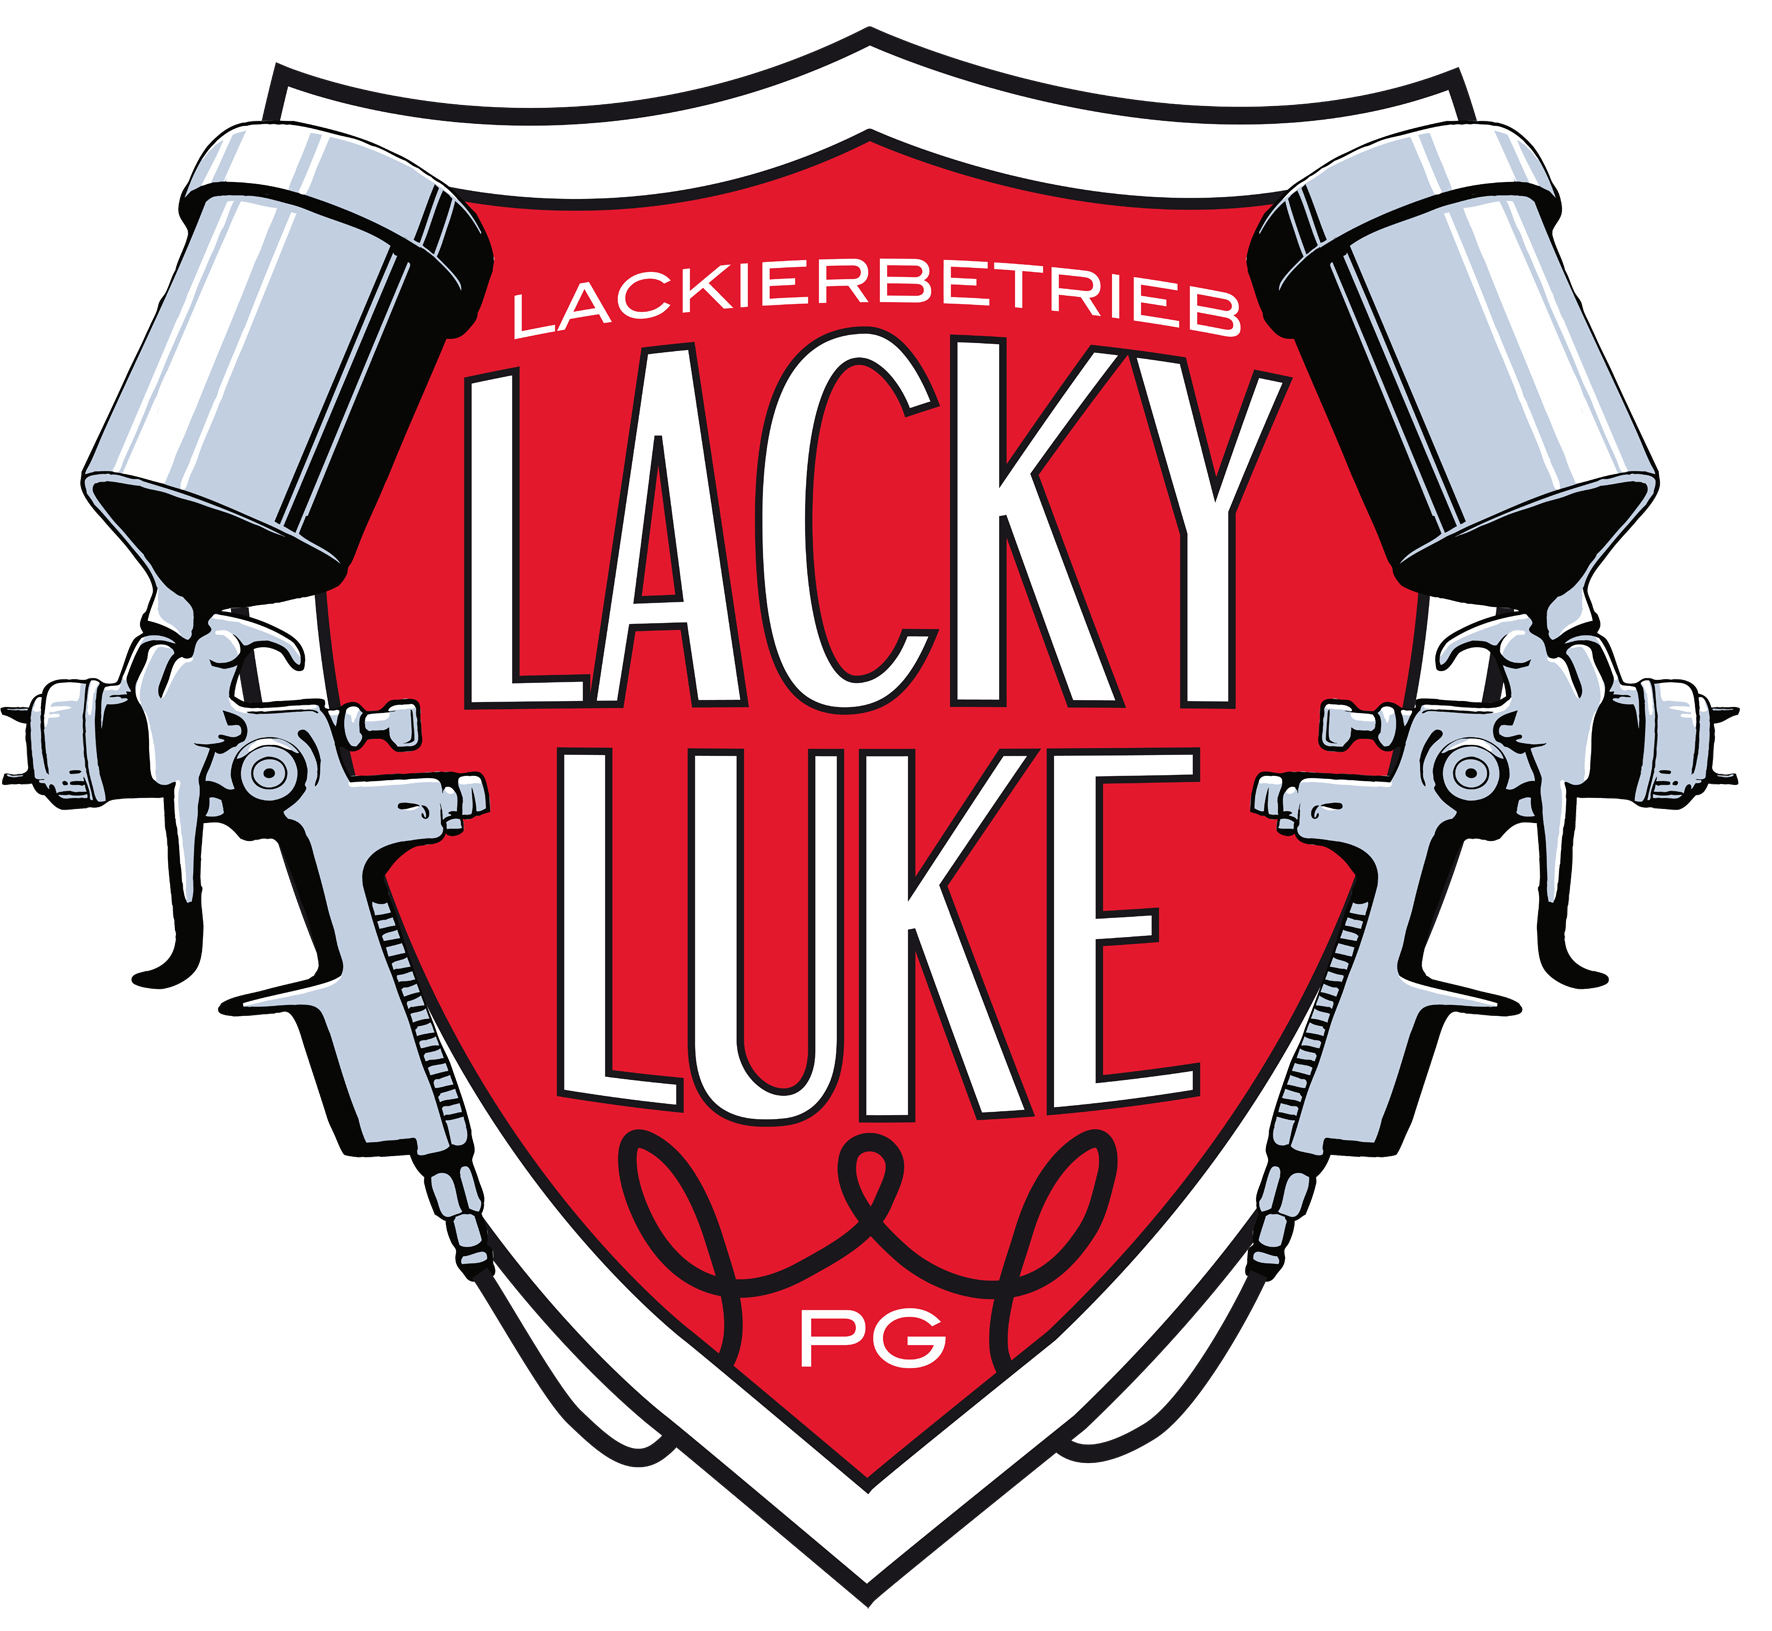 Lackierbetrieb Lacky-Luke: Ihr Lackierfachbetrieb in Niepars